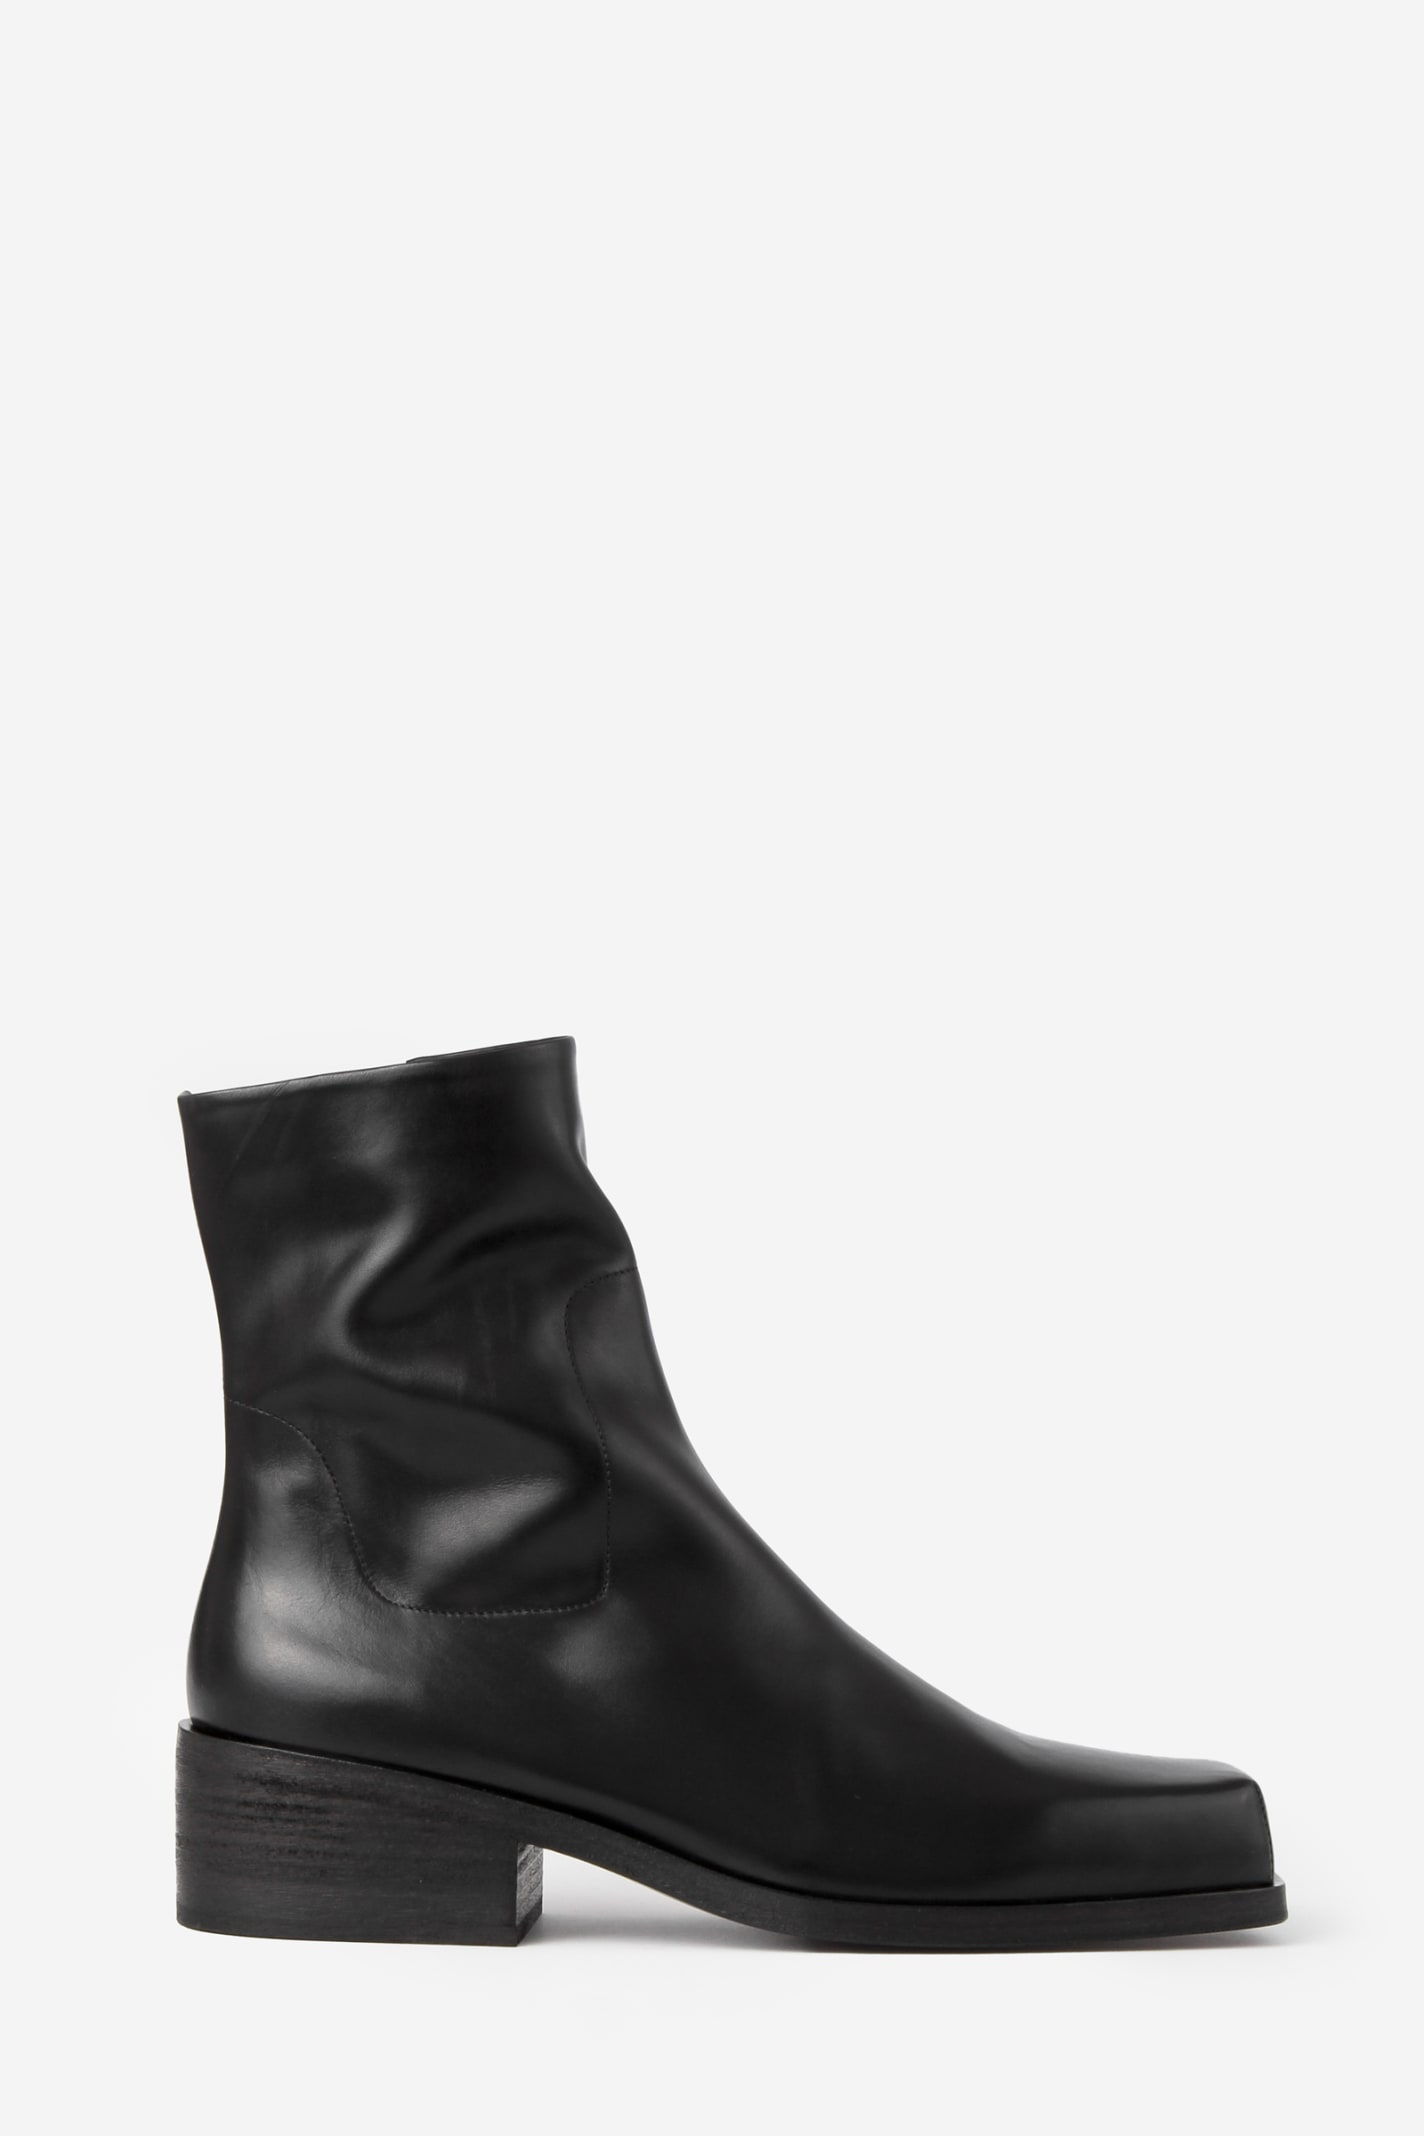 MARSÈLL Boots for Men | ModeSens